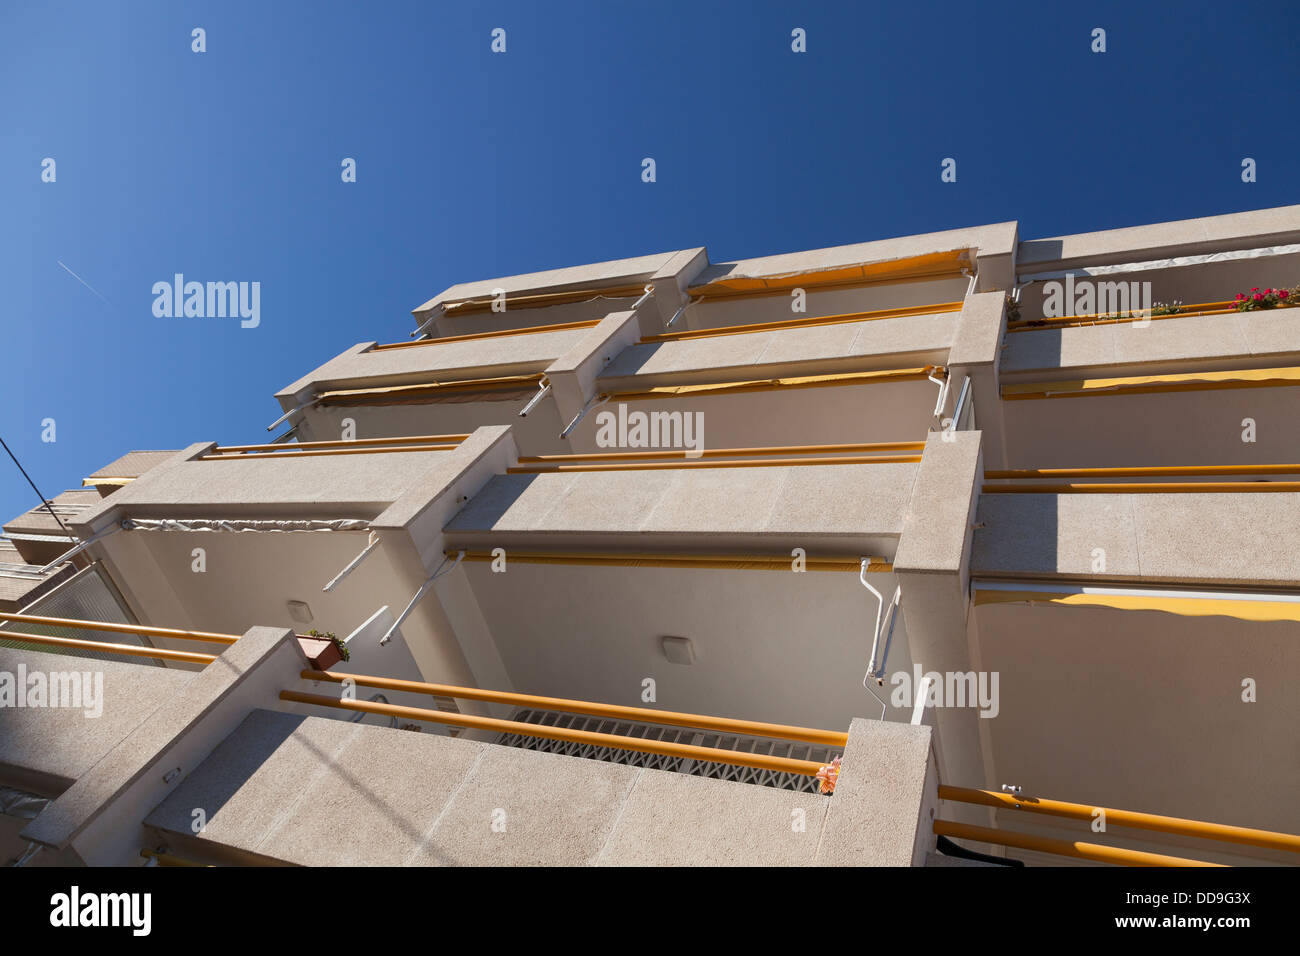 concrete balconies on low rise flats Stock Photo